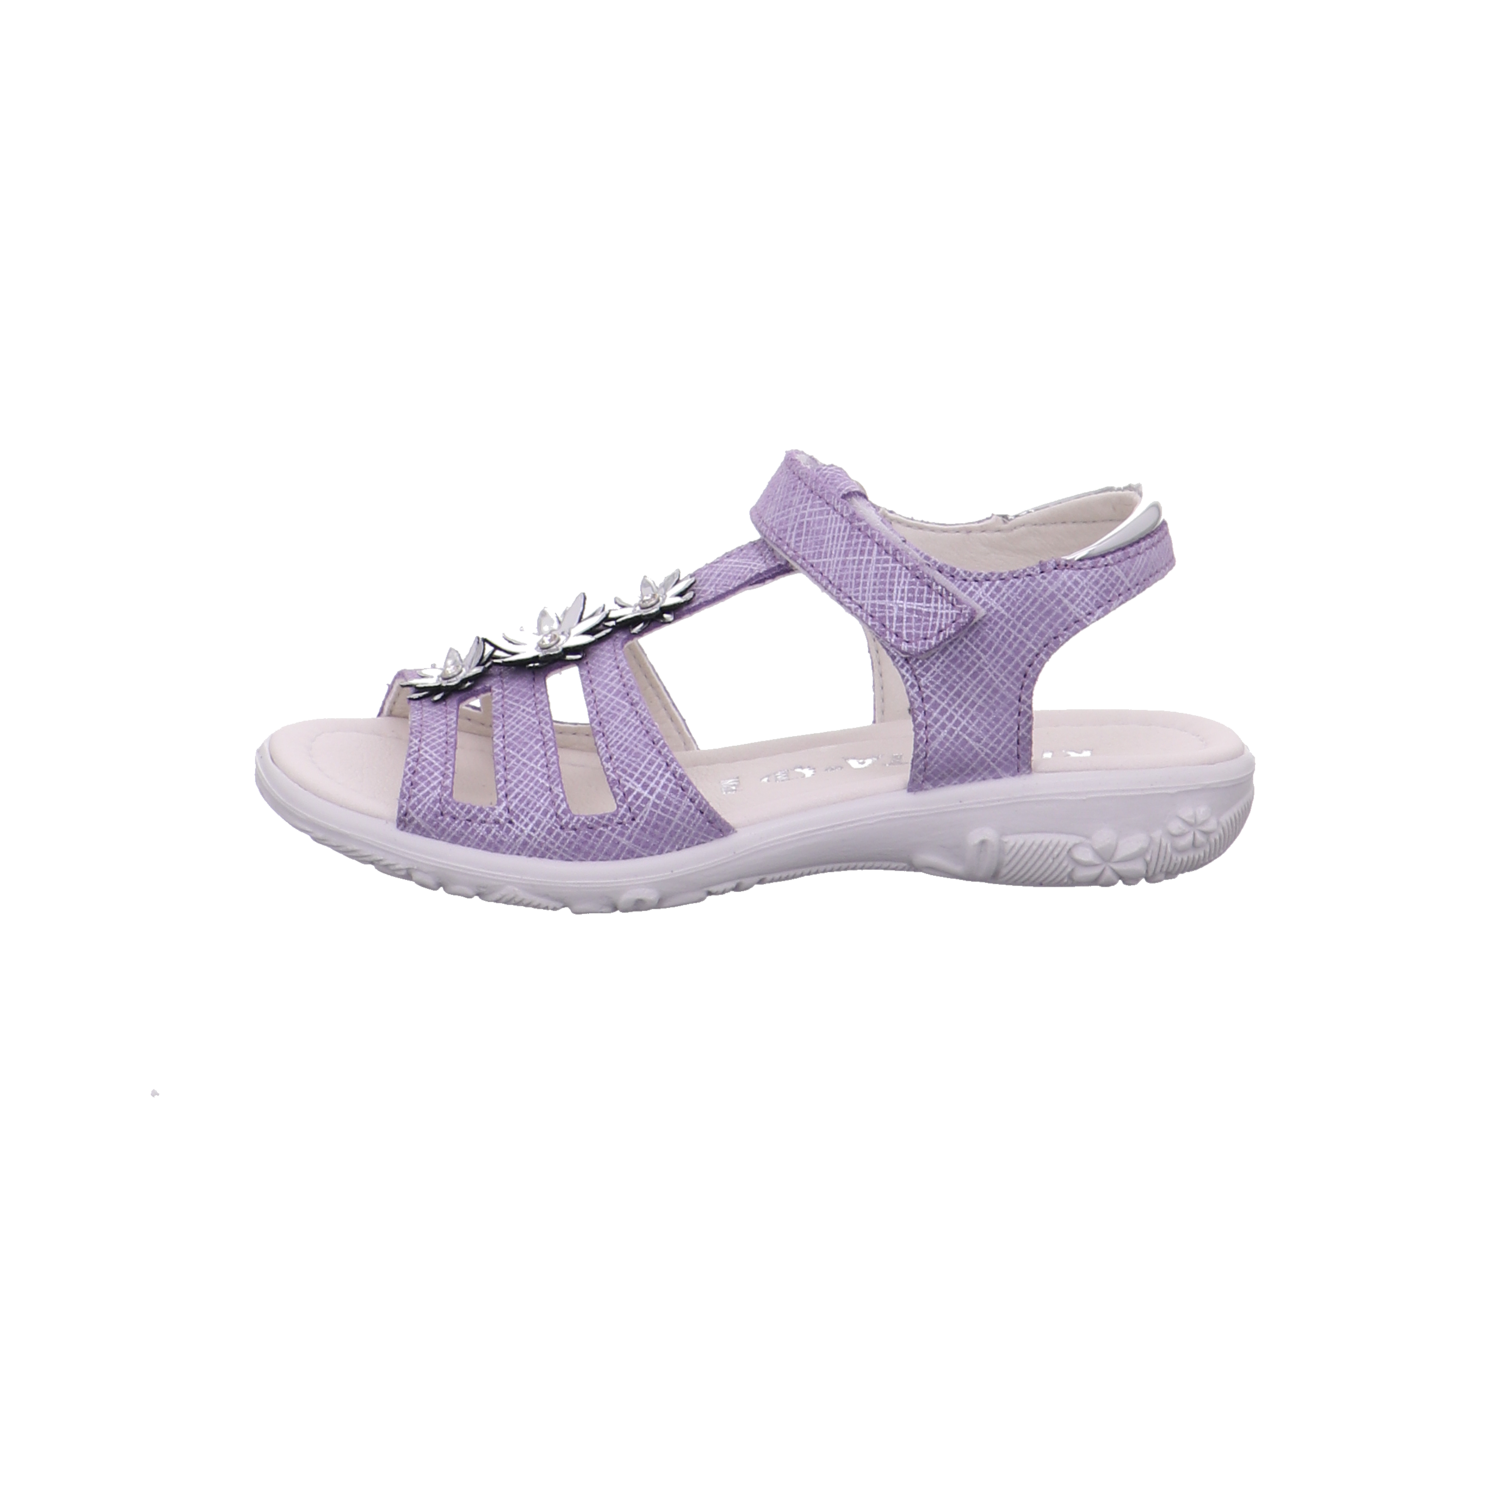 Ricosta Offene Schuhe viola lila Bild1